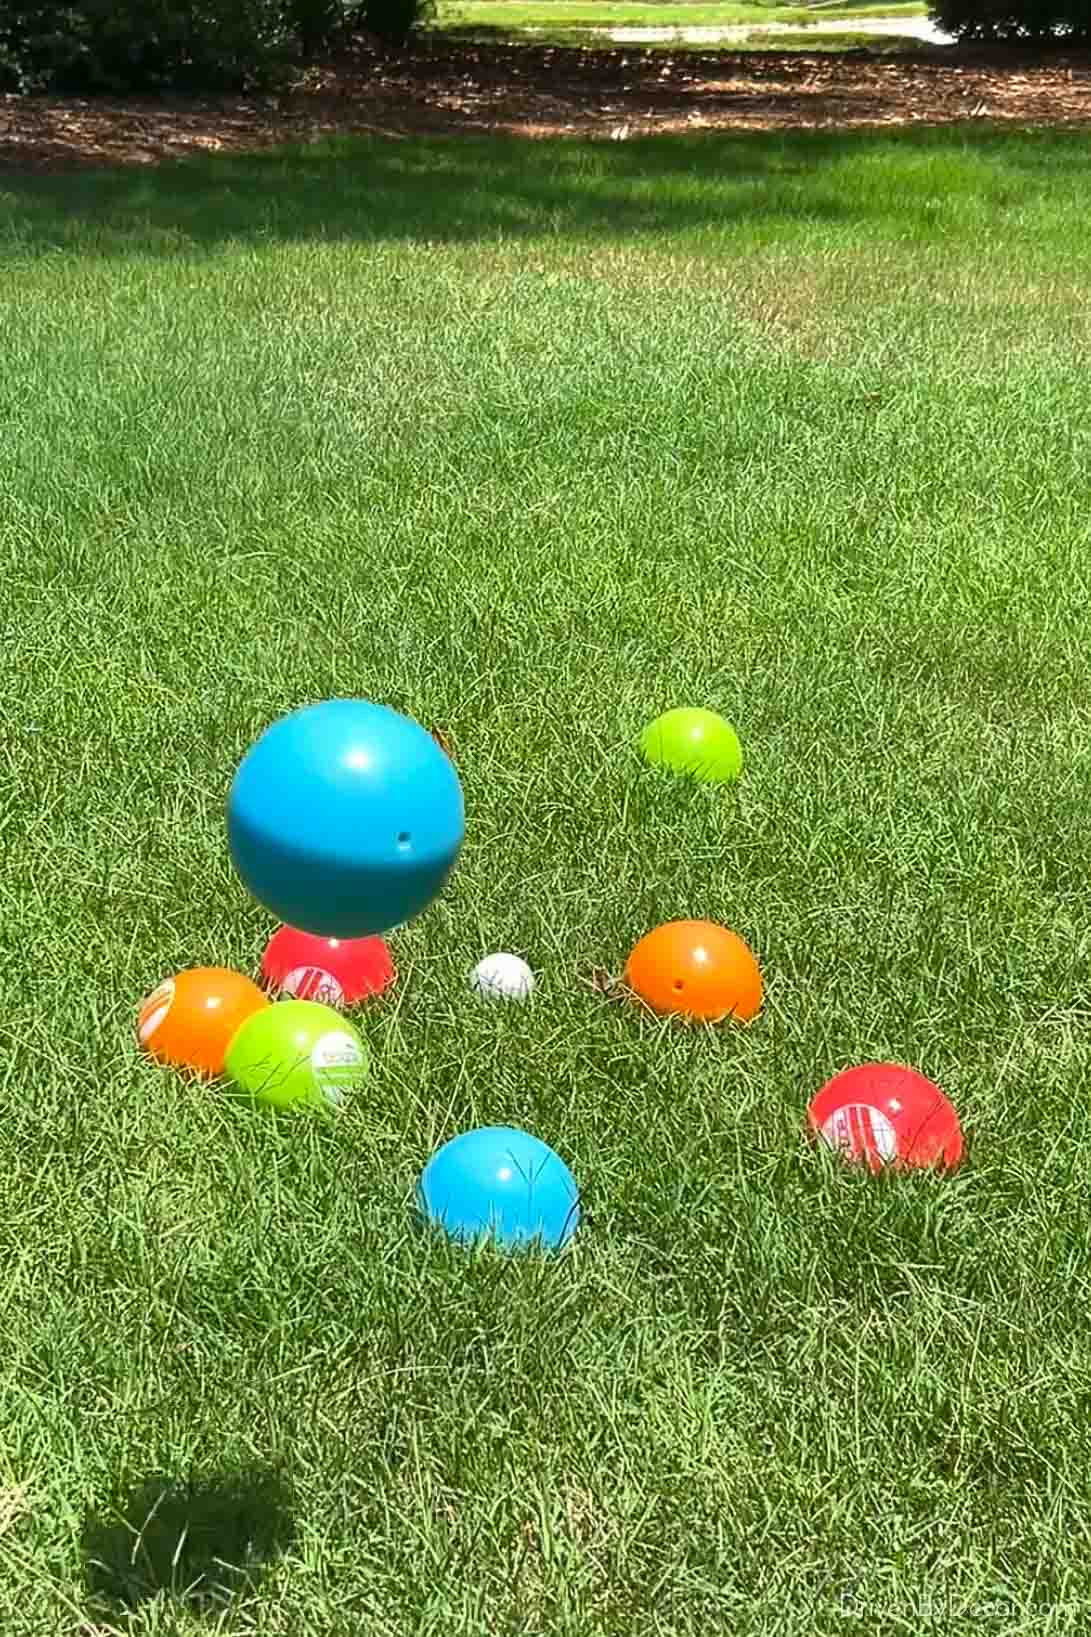 Soft bocce ball set - a great backyard game!